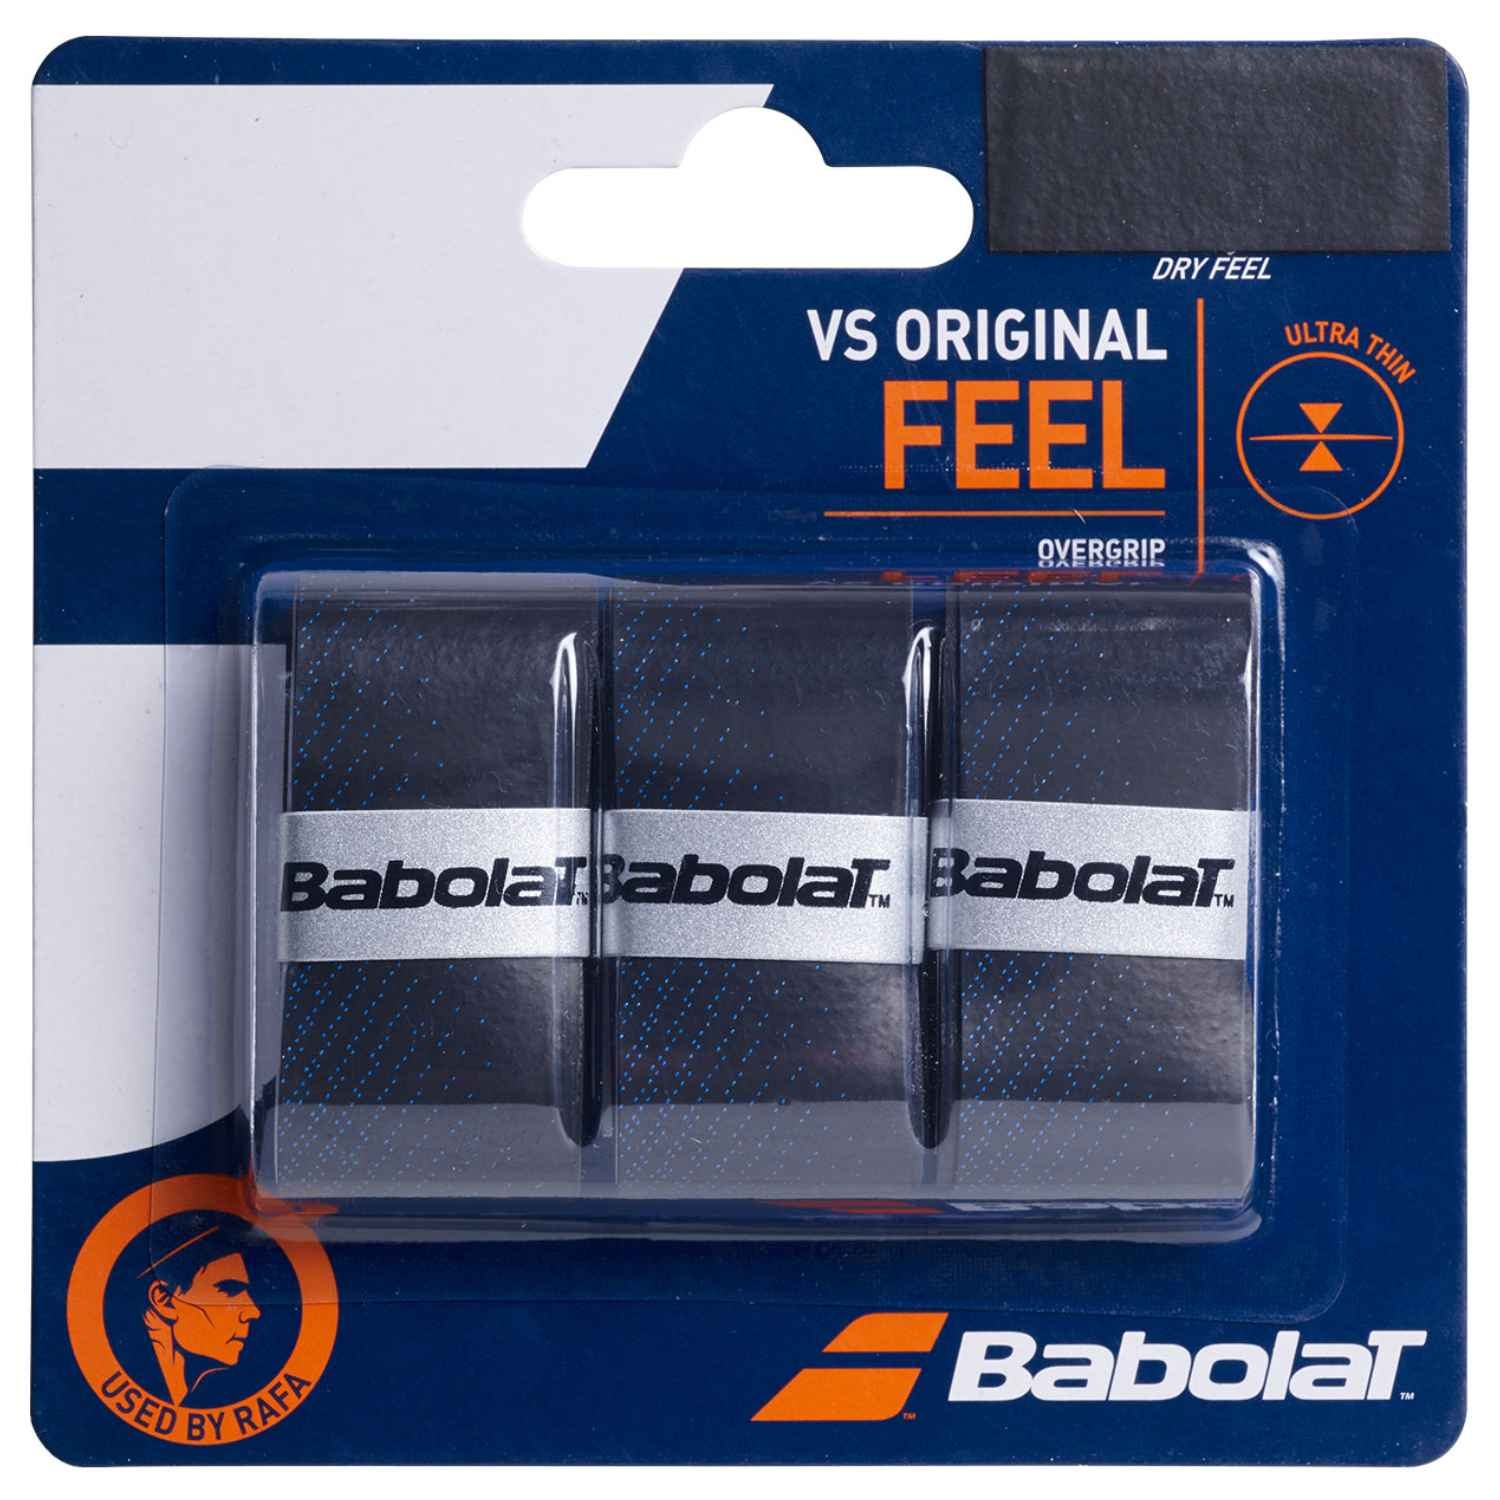 Babolat VS Original  Black/Blu